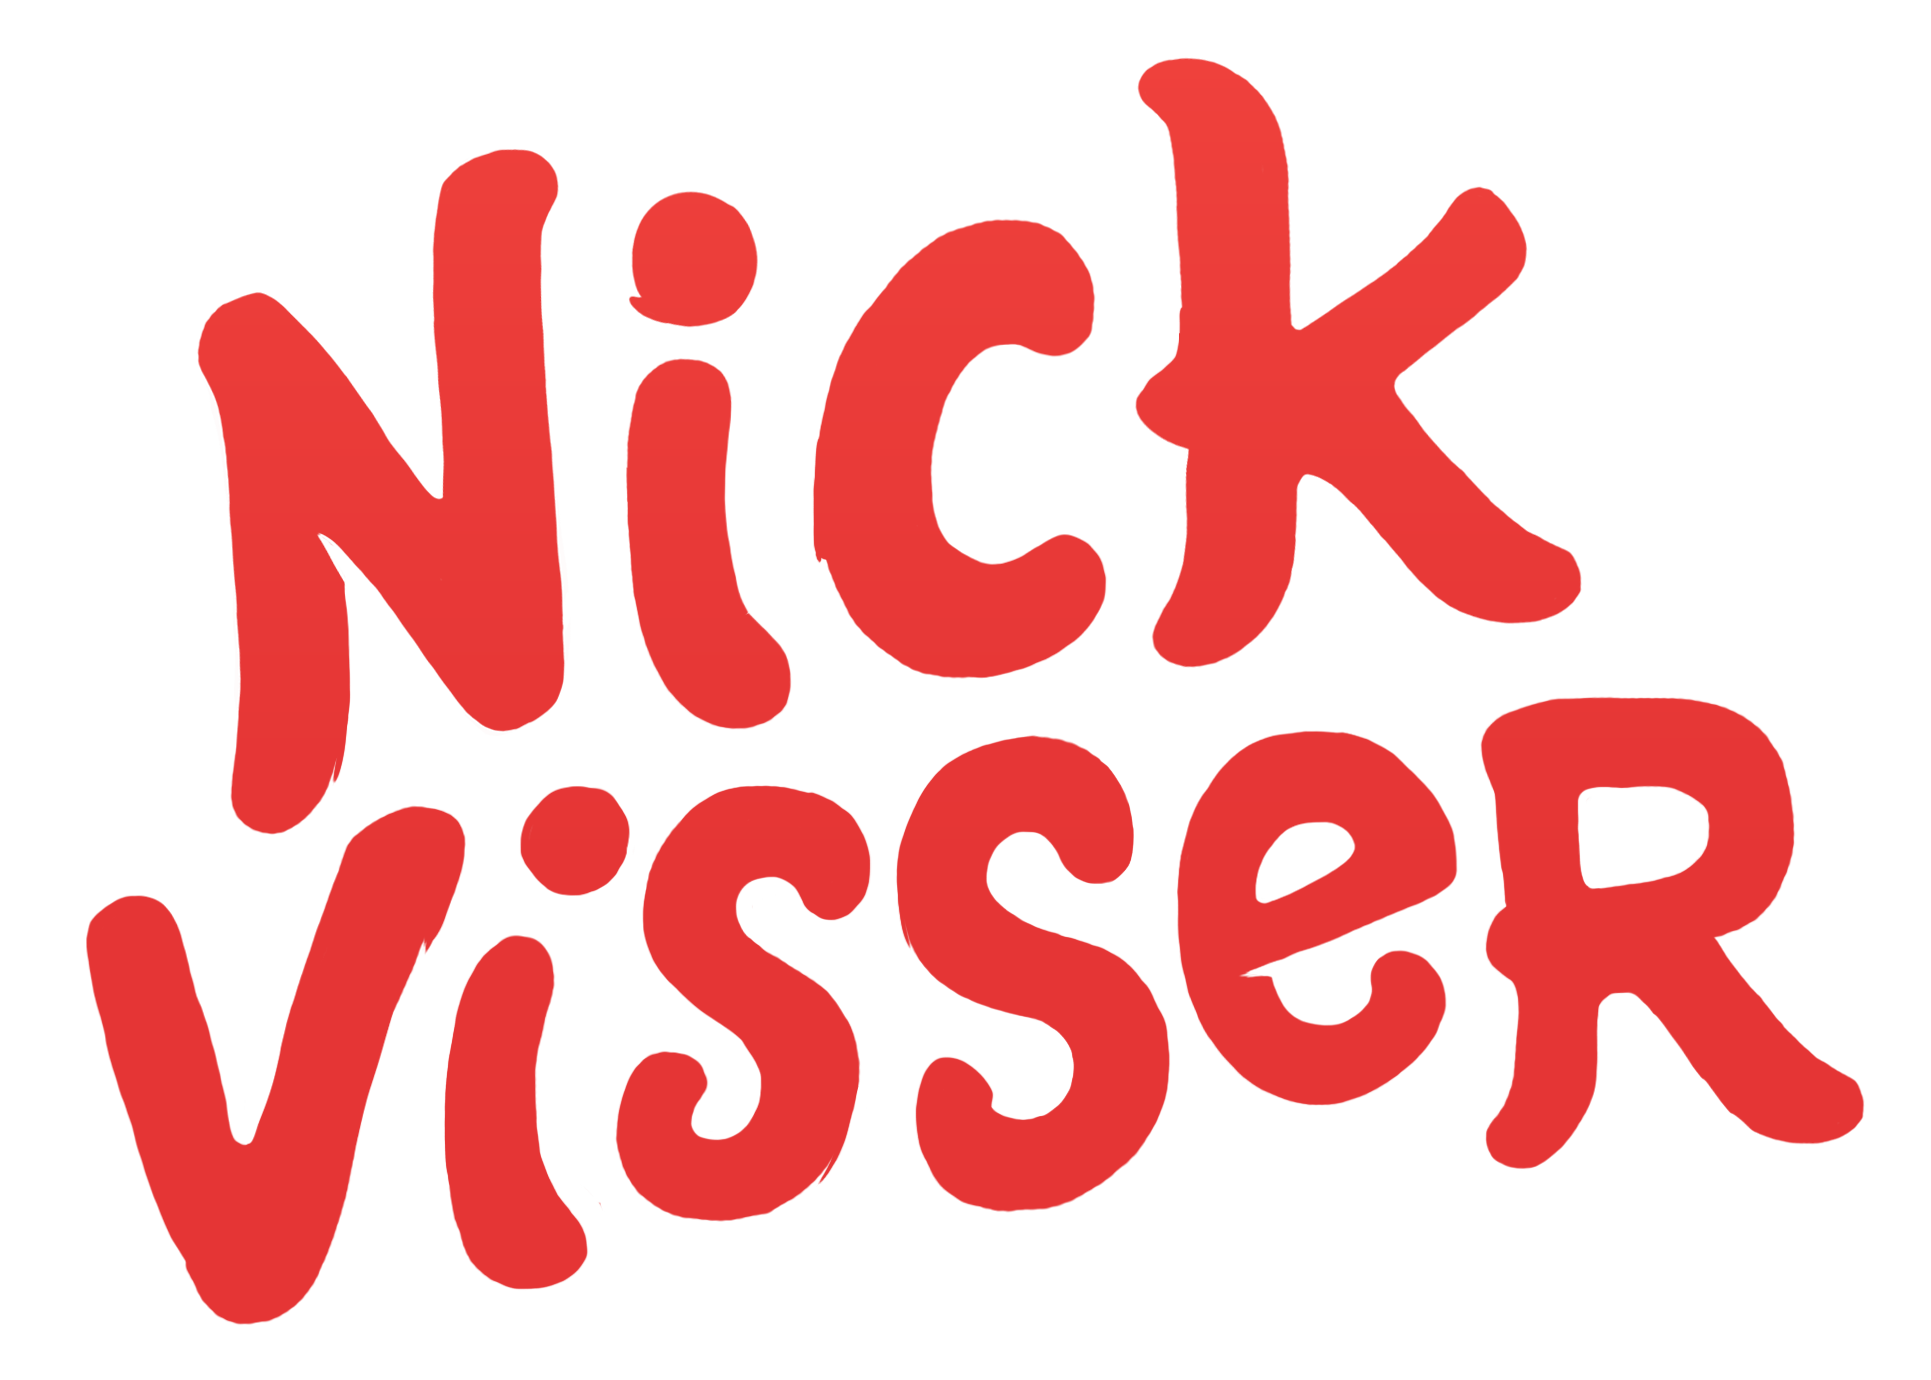 Nick Visser